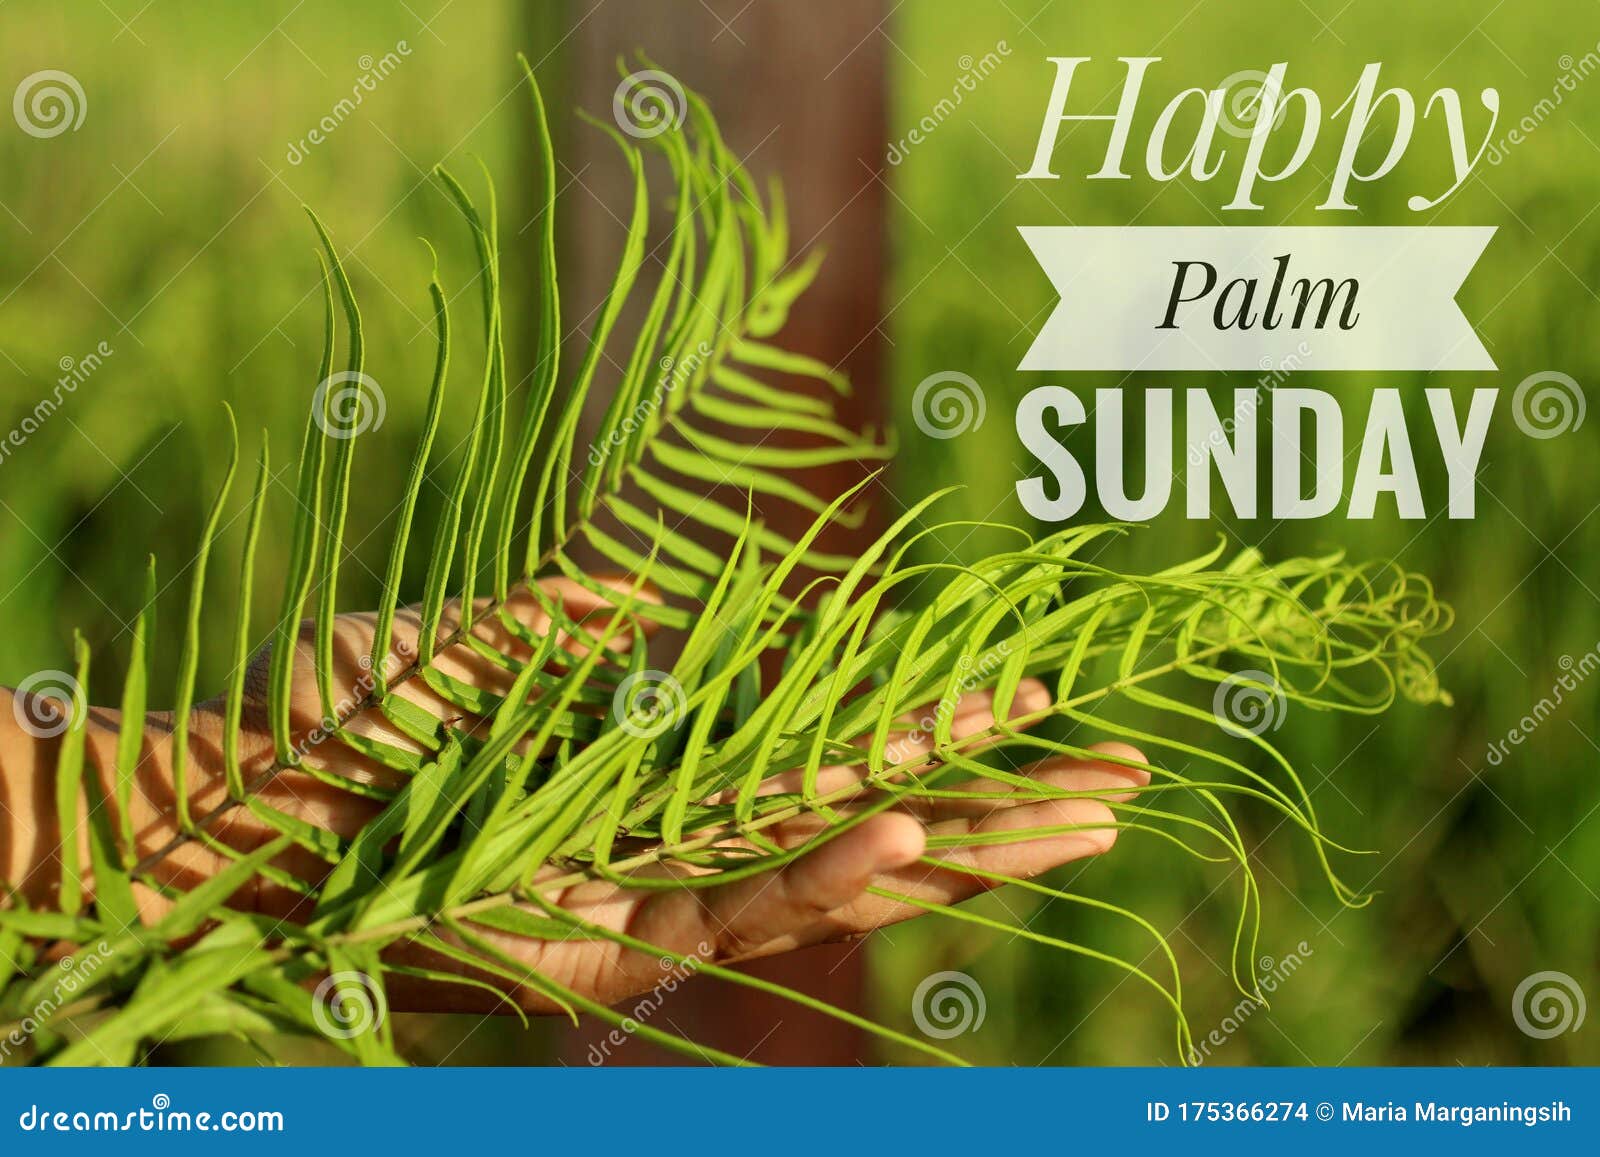 Happy Palm Sunday Text Desig on Fresh Green Bakcgorund and Fern or ...